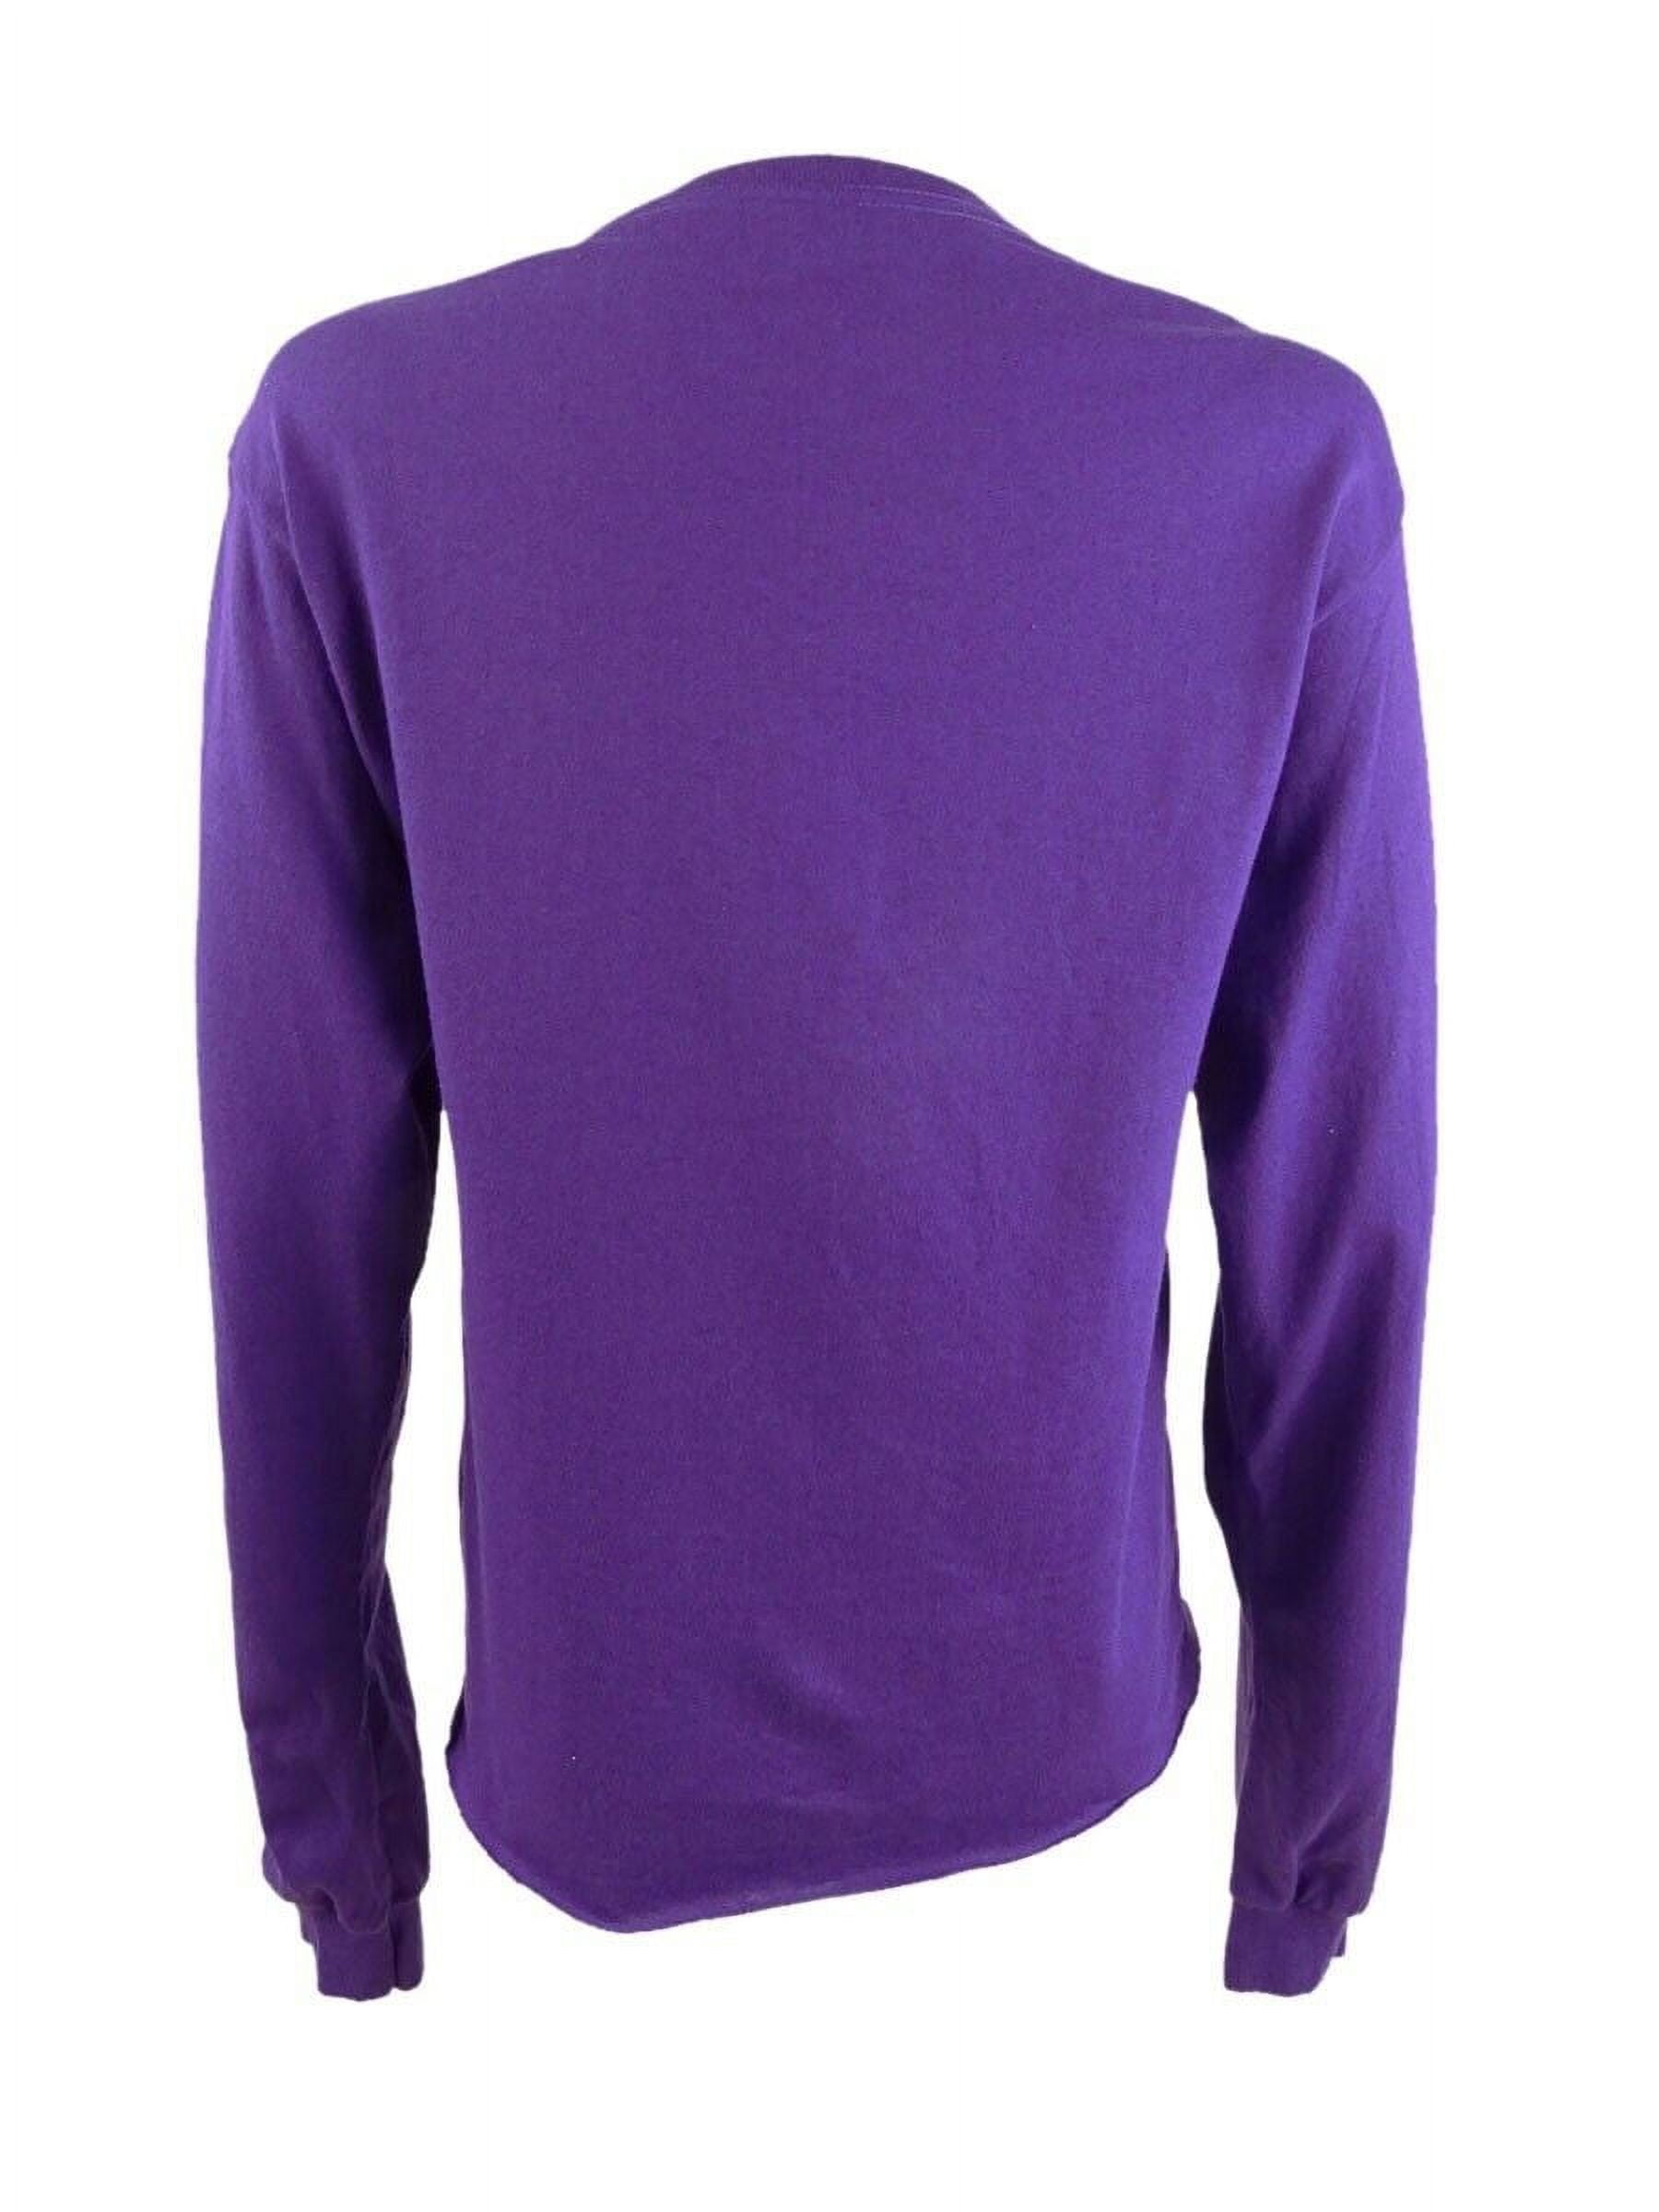 Mickey Ski Resort Purple Junior Women's Long Sleeve Cropped T-Shirt  (Xlarge)